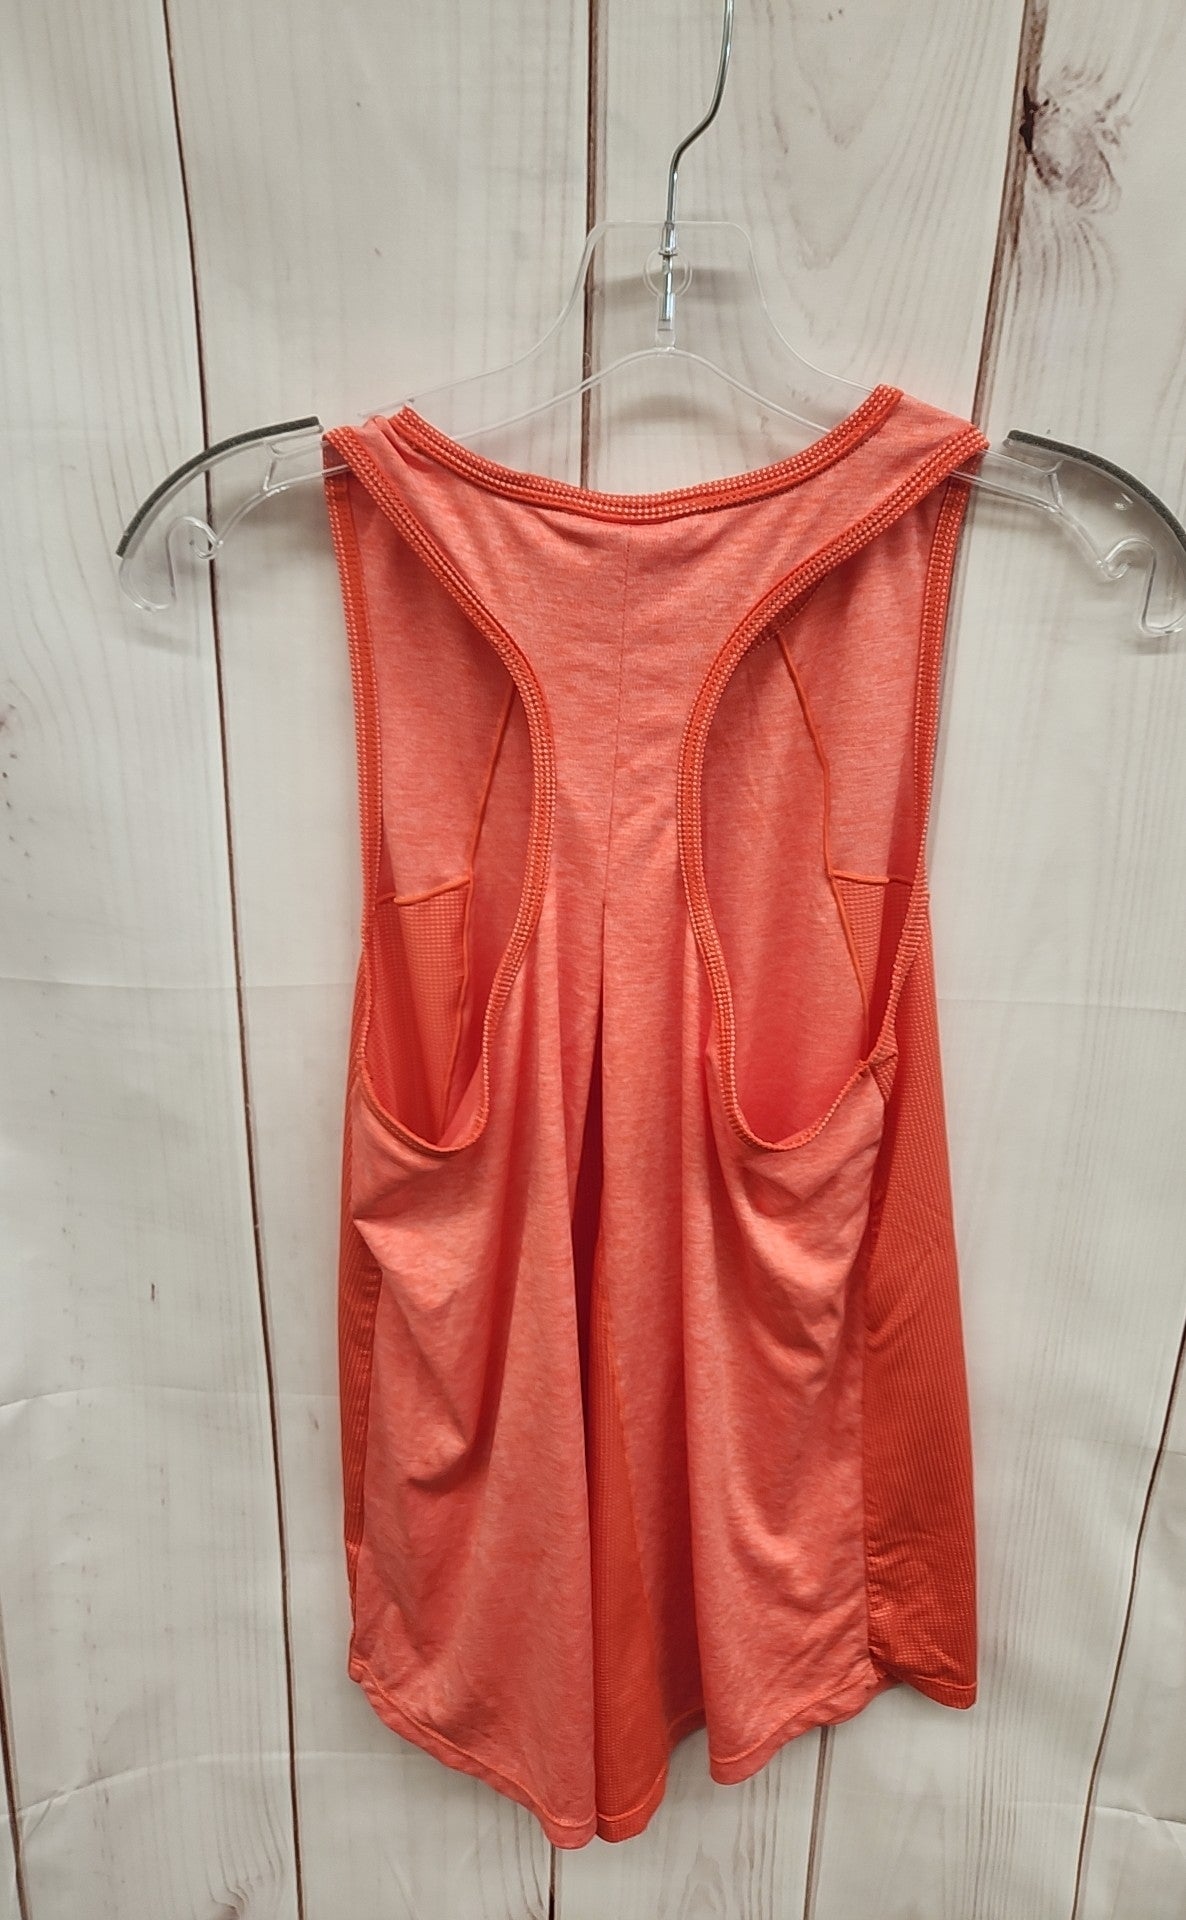 Avia Women's Size M Orange Sleeveless Top